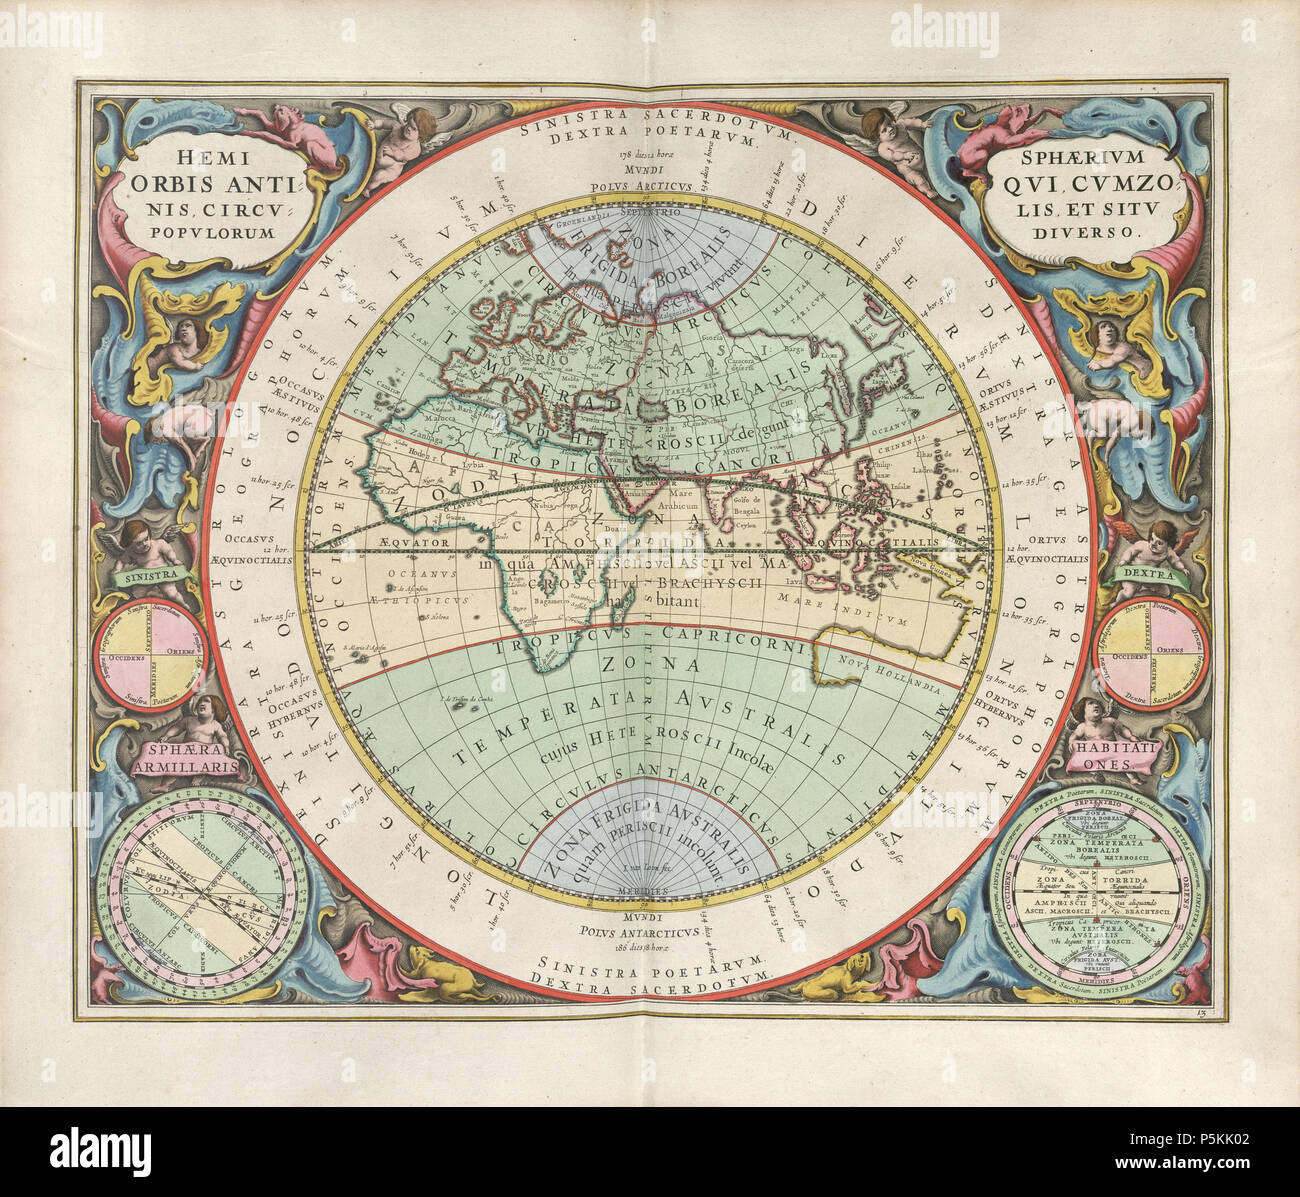 N/A. Andreas Cellarius: Harmonia macrocosmica seu atlas universalis et novus, totius universi creati cosmographiam generalem, et novam exhibens. Plate 13. HEMISPHÆRIVM ORBIS ANTIQVI, CVM ZONIS, CIRCVLIS, ET SITV POPVLORUM DIVERSO - The hemisphere of the Old World, with its (climate) zones, (meridian) circles and the dwelling places of the distinctive races. 1661.   Andreas Cellarius  (1596–1665)      Description German cartographer  Date of birth/death 1596 1665  Location of birth/death Neuhausen Hoorn  Authority control  : Q496645 VIAF:100166893 ISNI:0000 0001 2283 4178 LCCN:n82045031 GND:124 Stock Photo